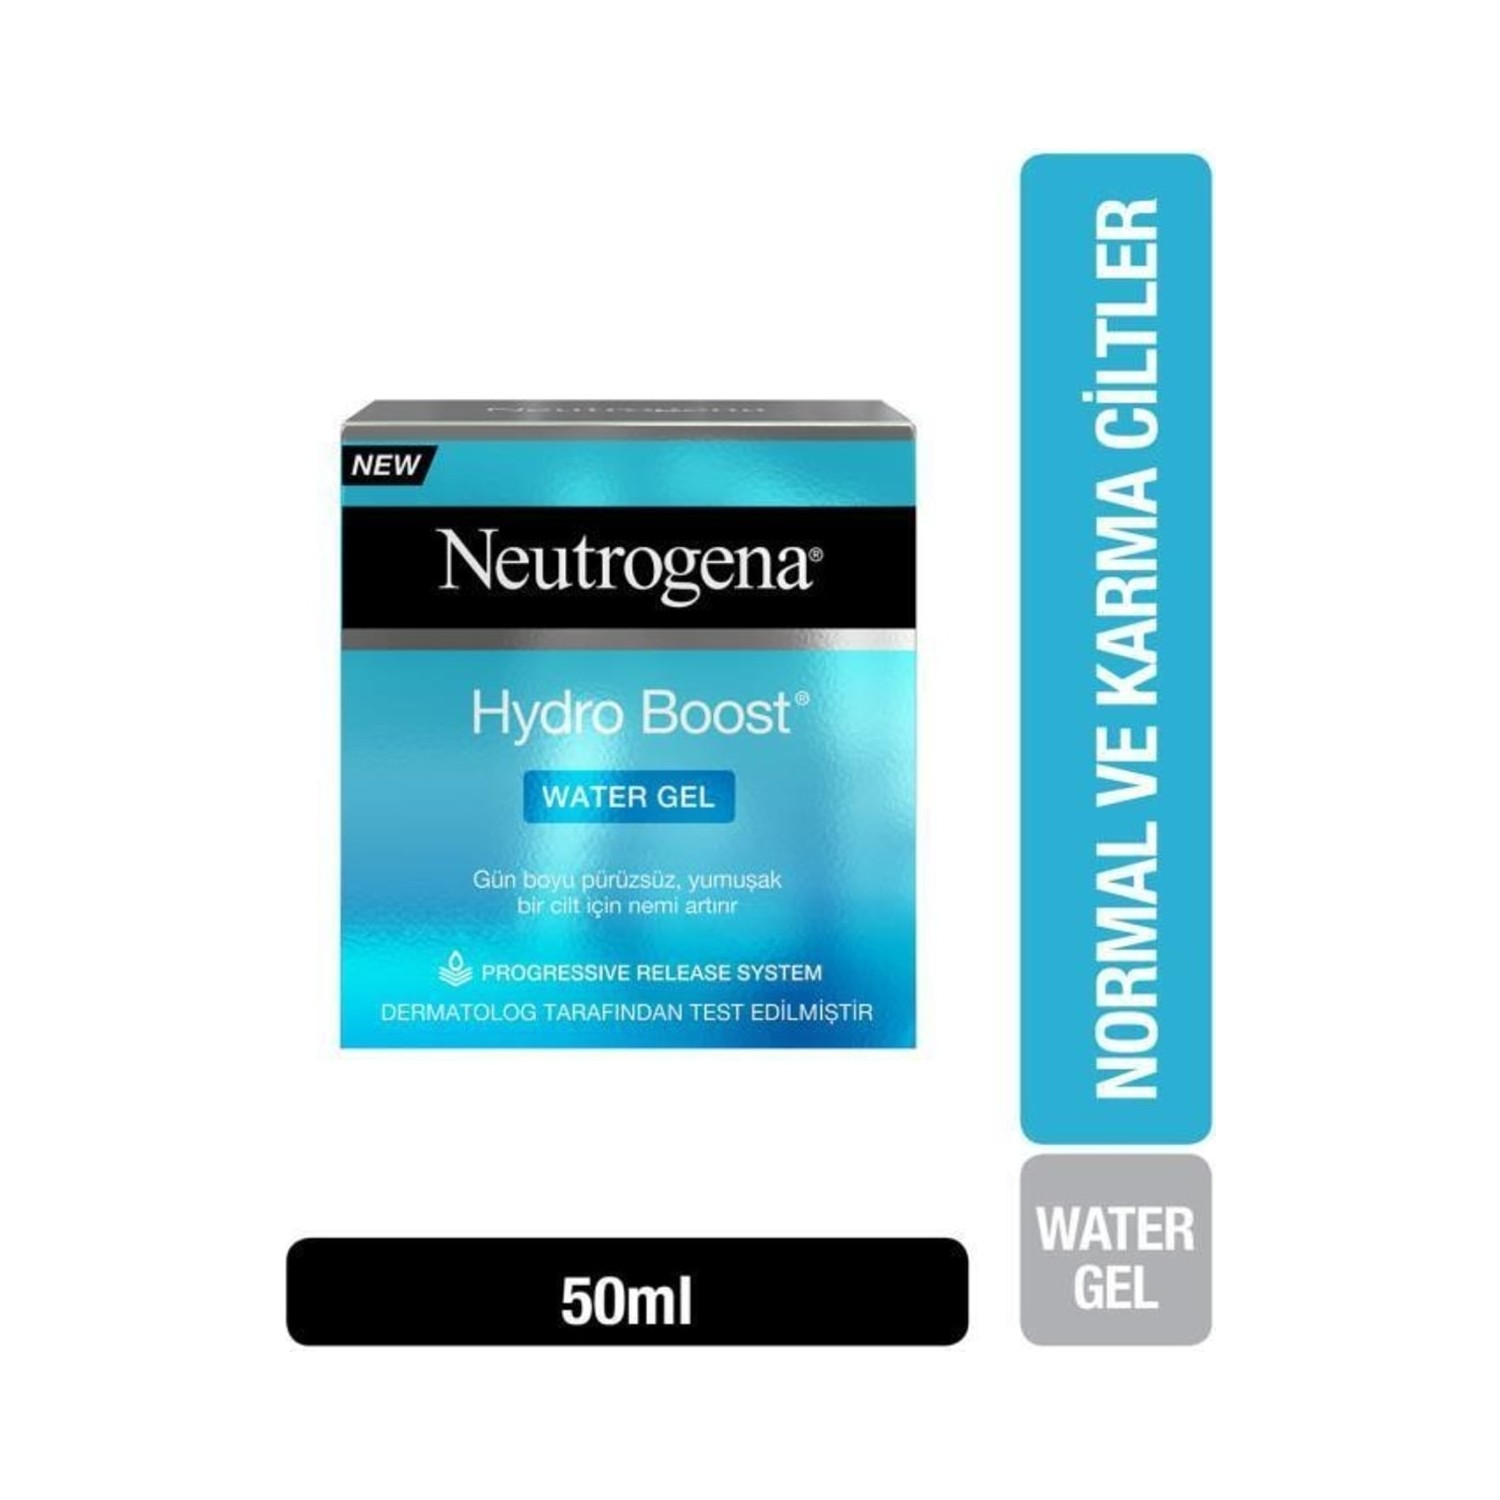 Увлажняющий крем для лица Neutrogena Hydro Boost Water Gel, 50 мл neutrogena hydro boost увлажняющий очищающий гель для лица 170 г 6 унций